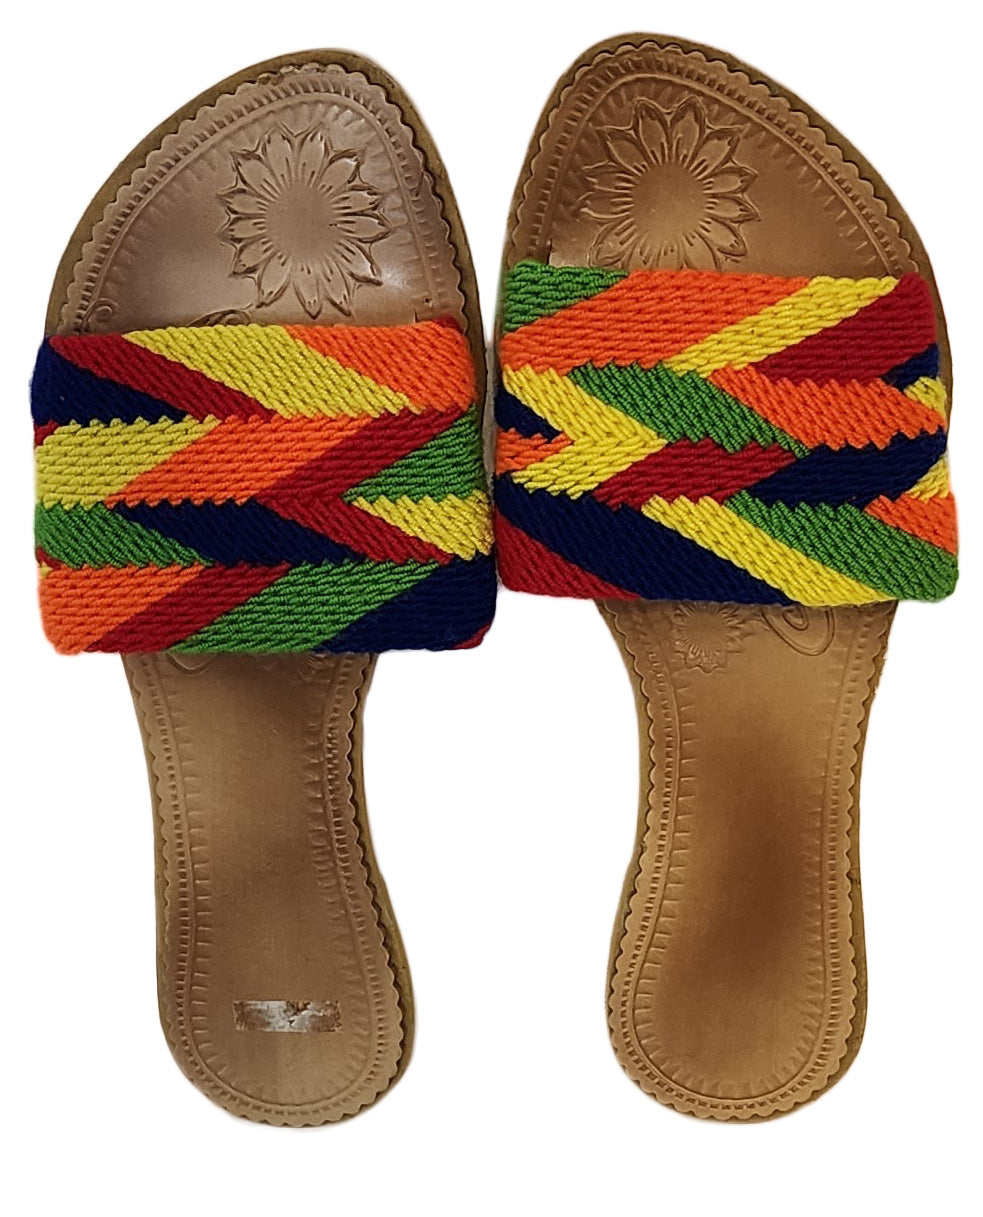 1 Kamari Wayuu Sandal (Size 7.5) - Wuitusu